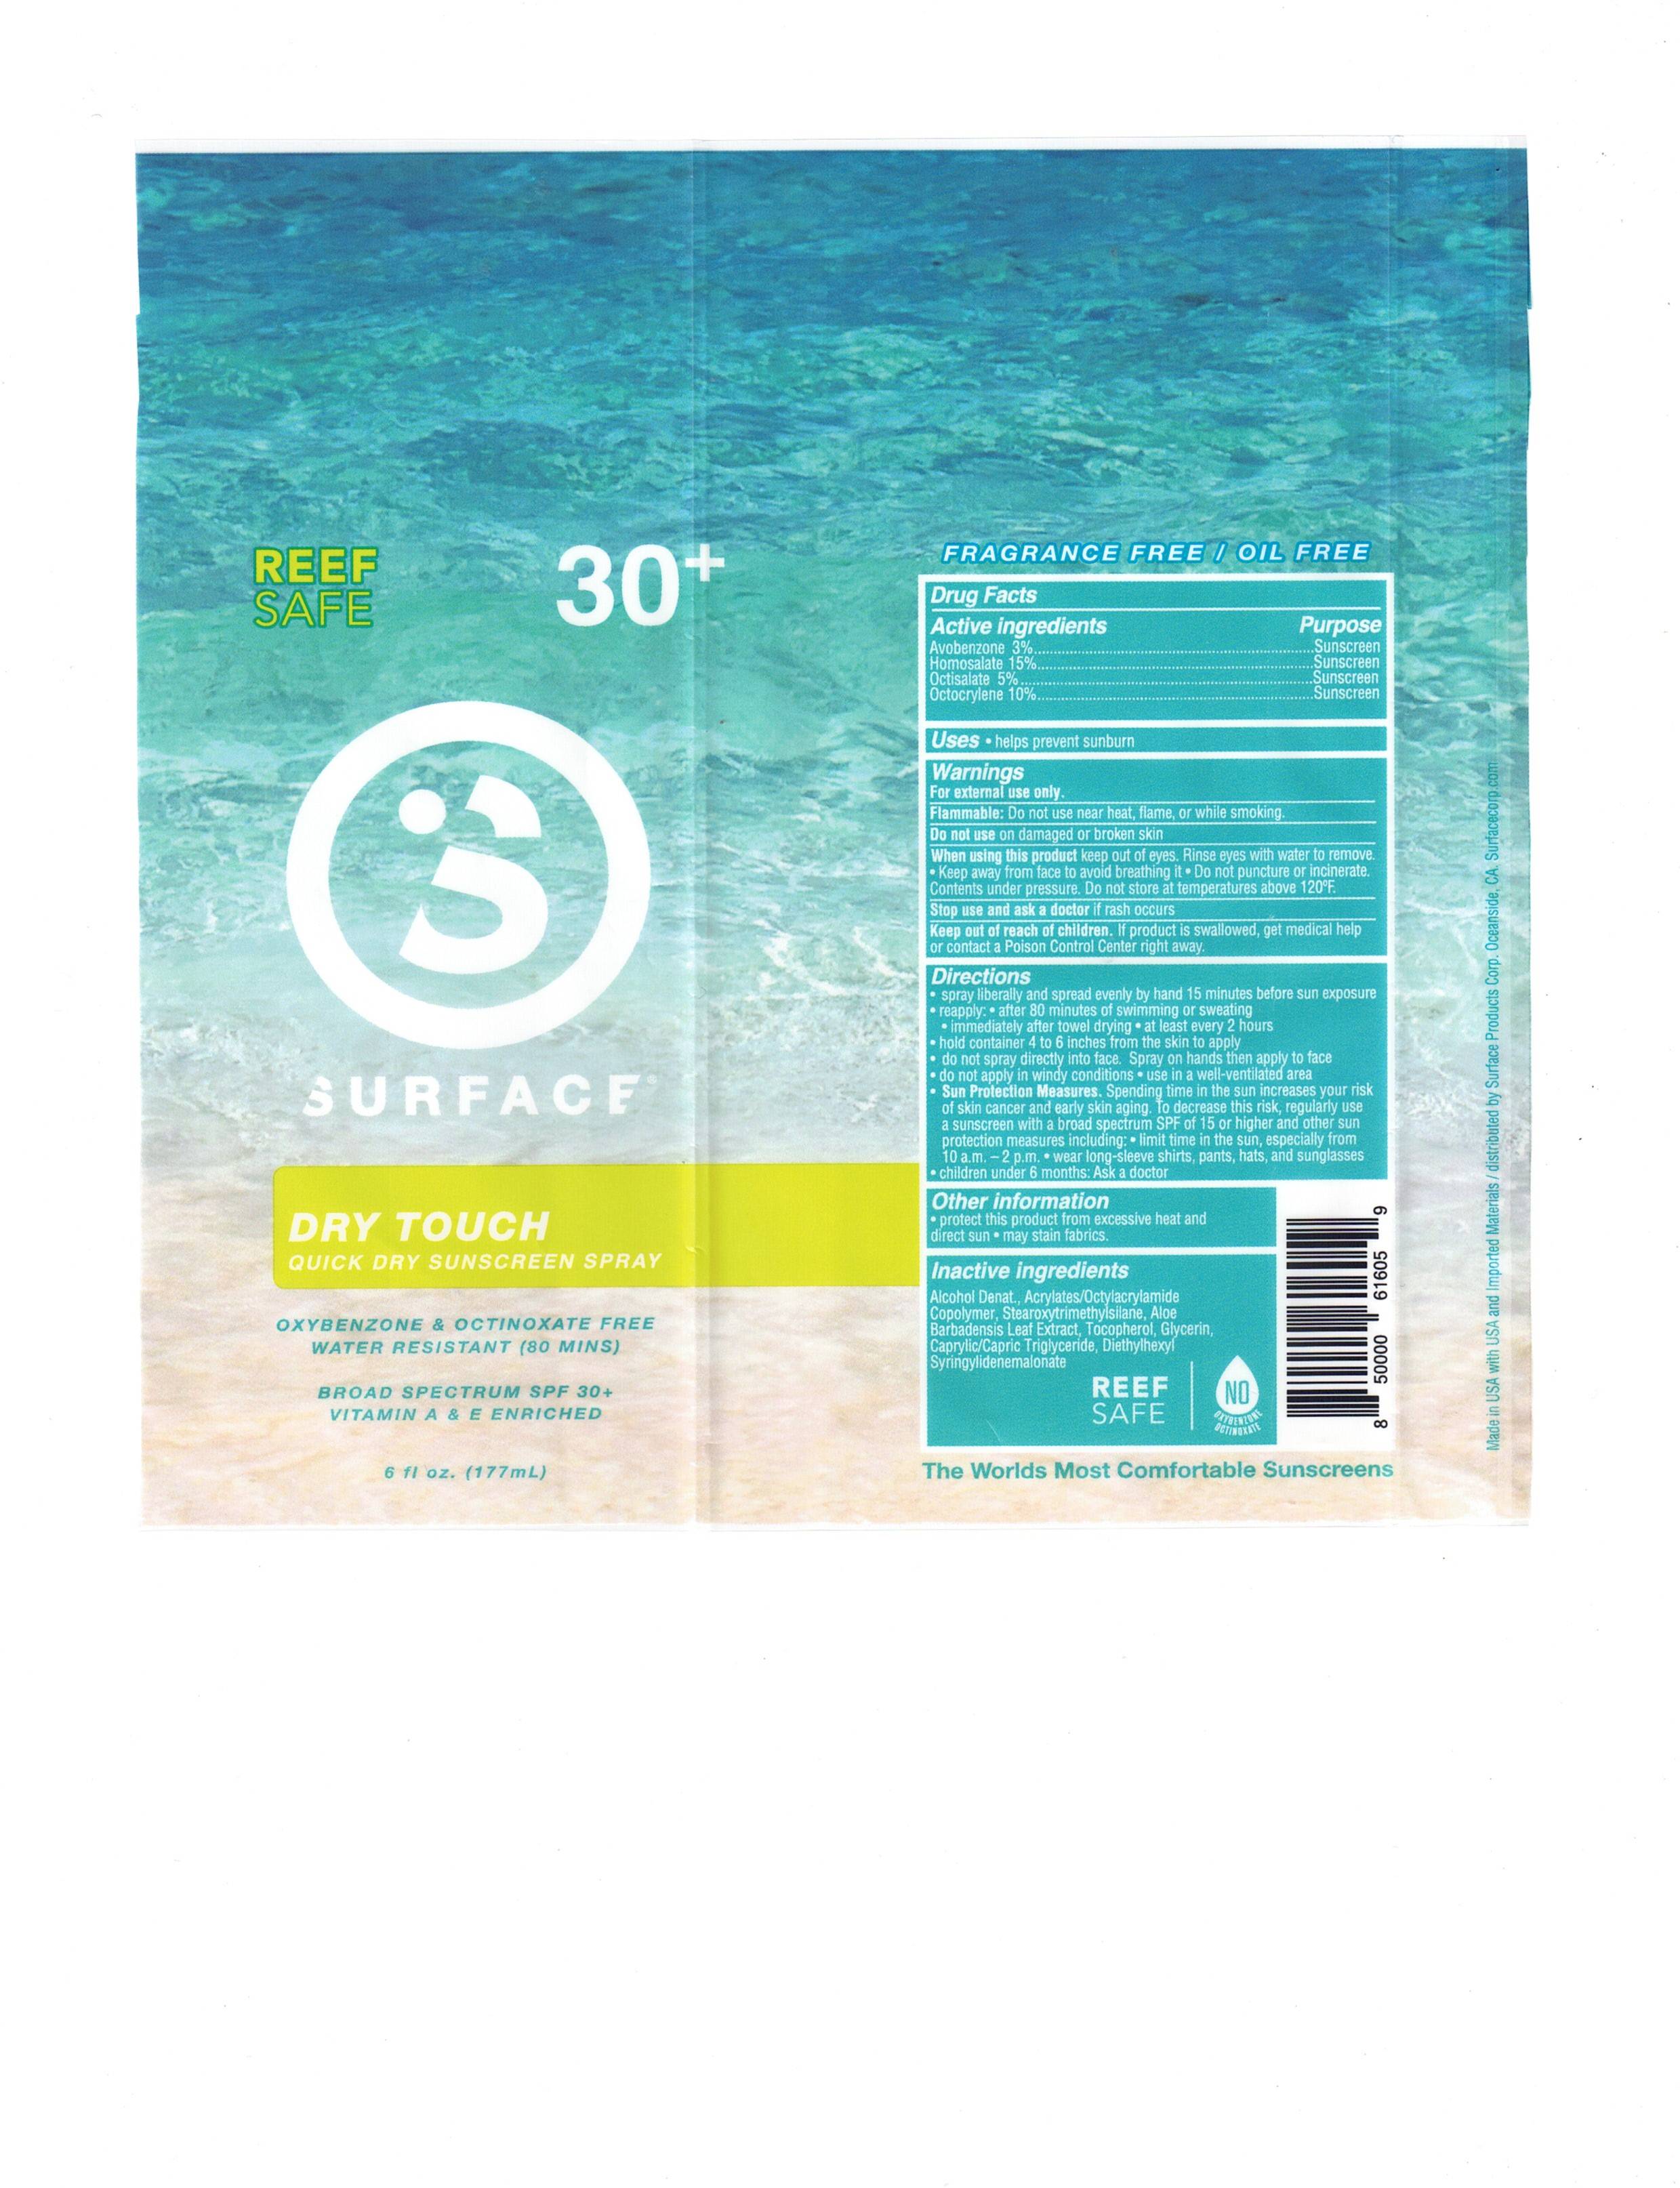 Surface Sun Dry Touch SPF 30 Sunscreen